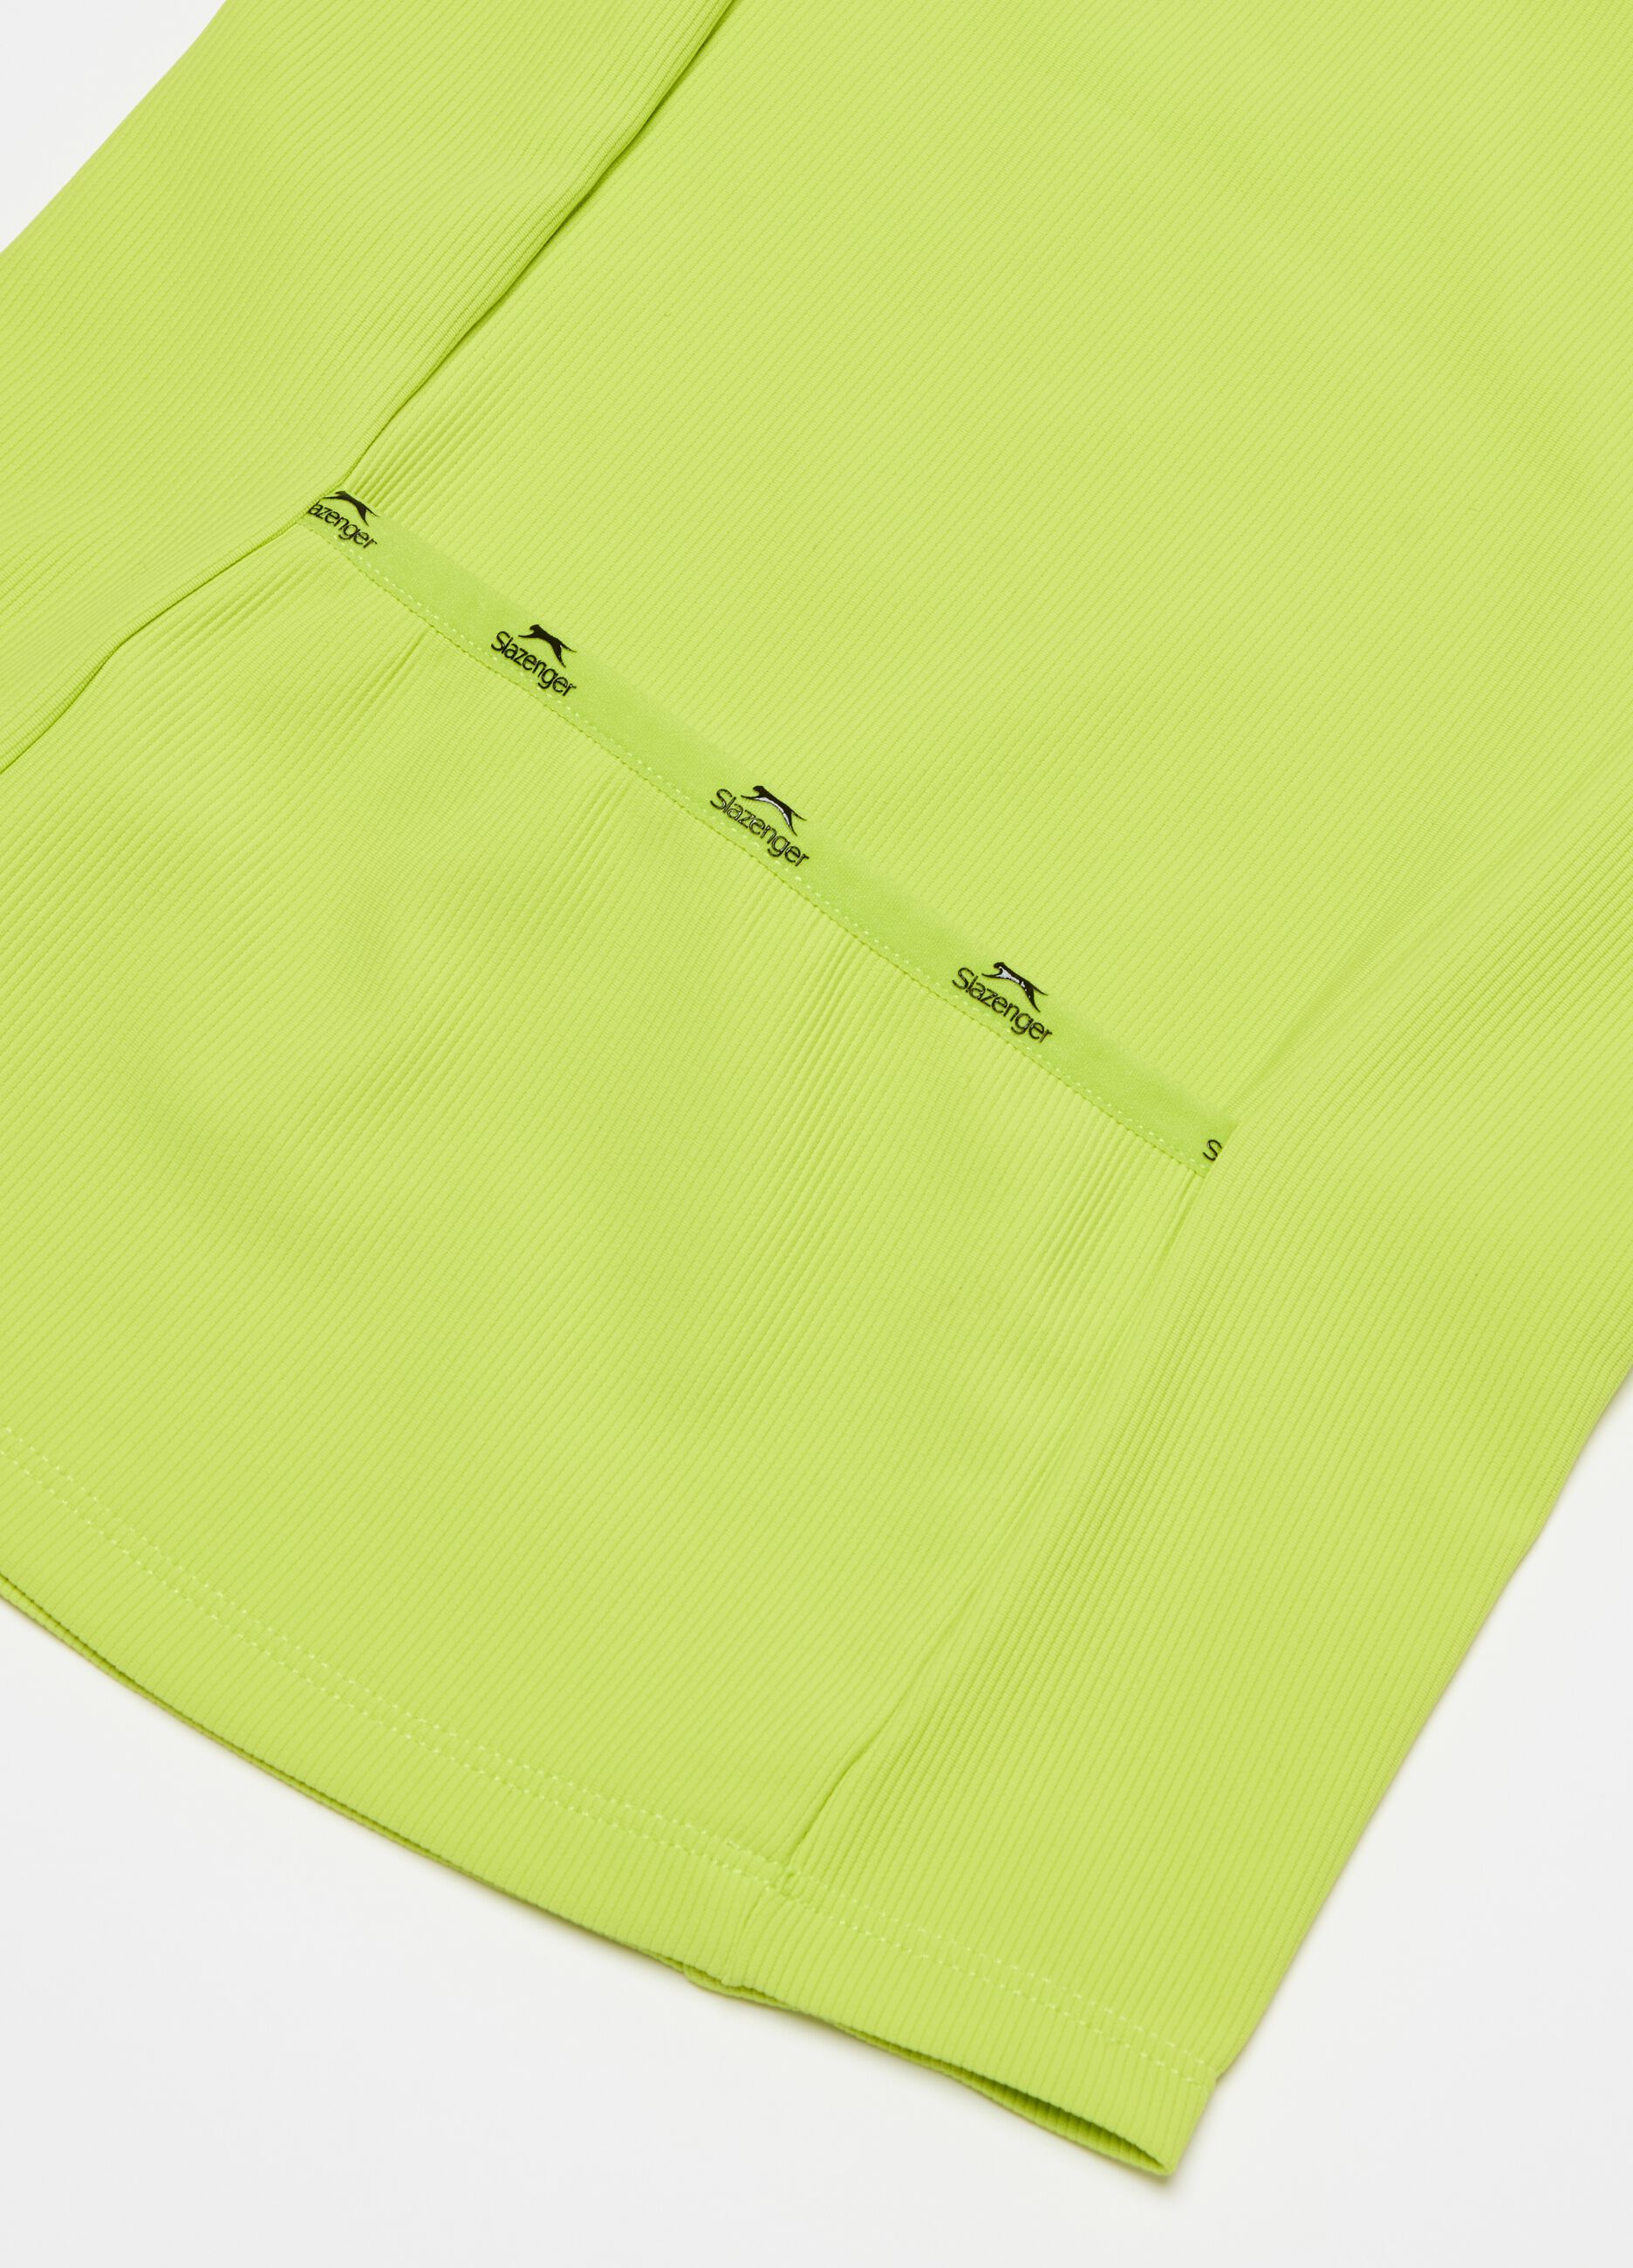 Camiseta de tirantes de tenis secado rápido Slazenger